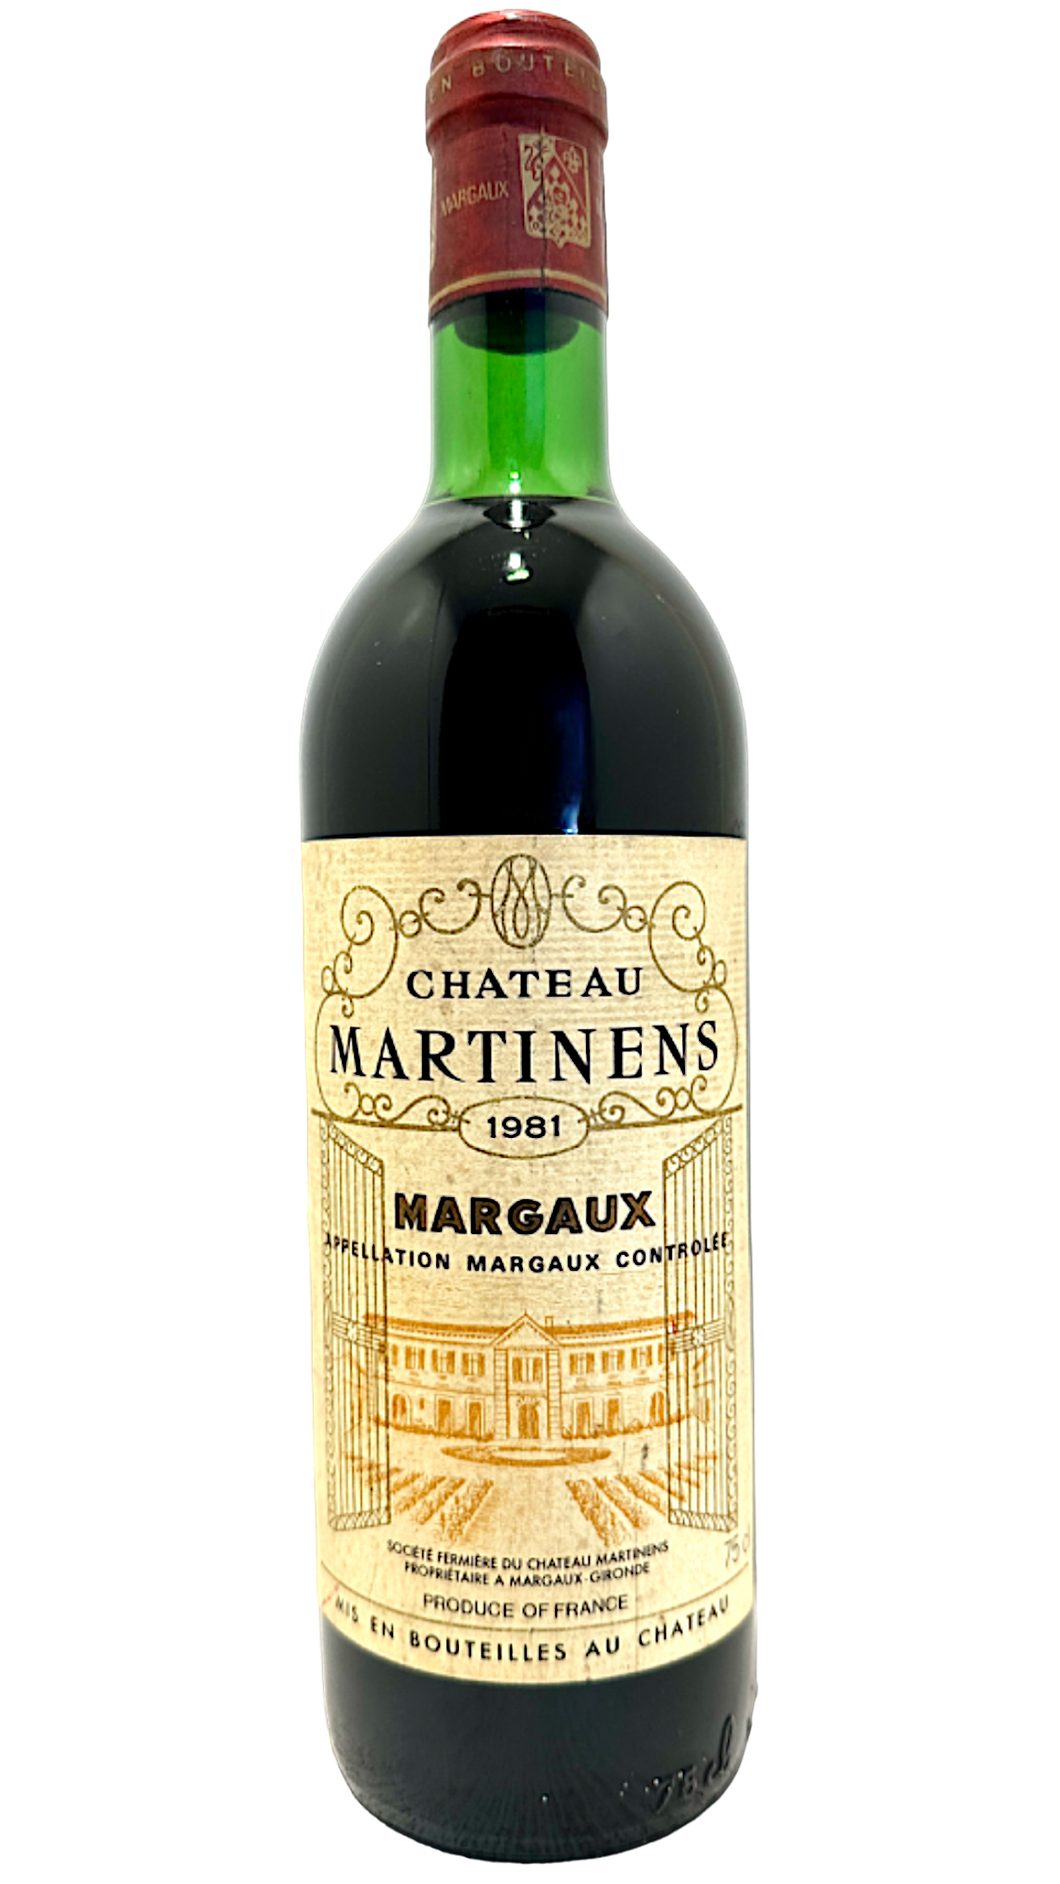 Margaux Chateau Martinens 1981